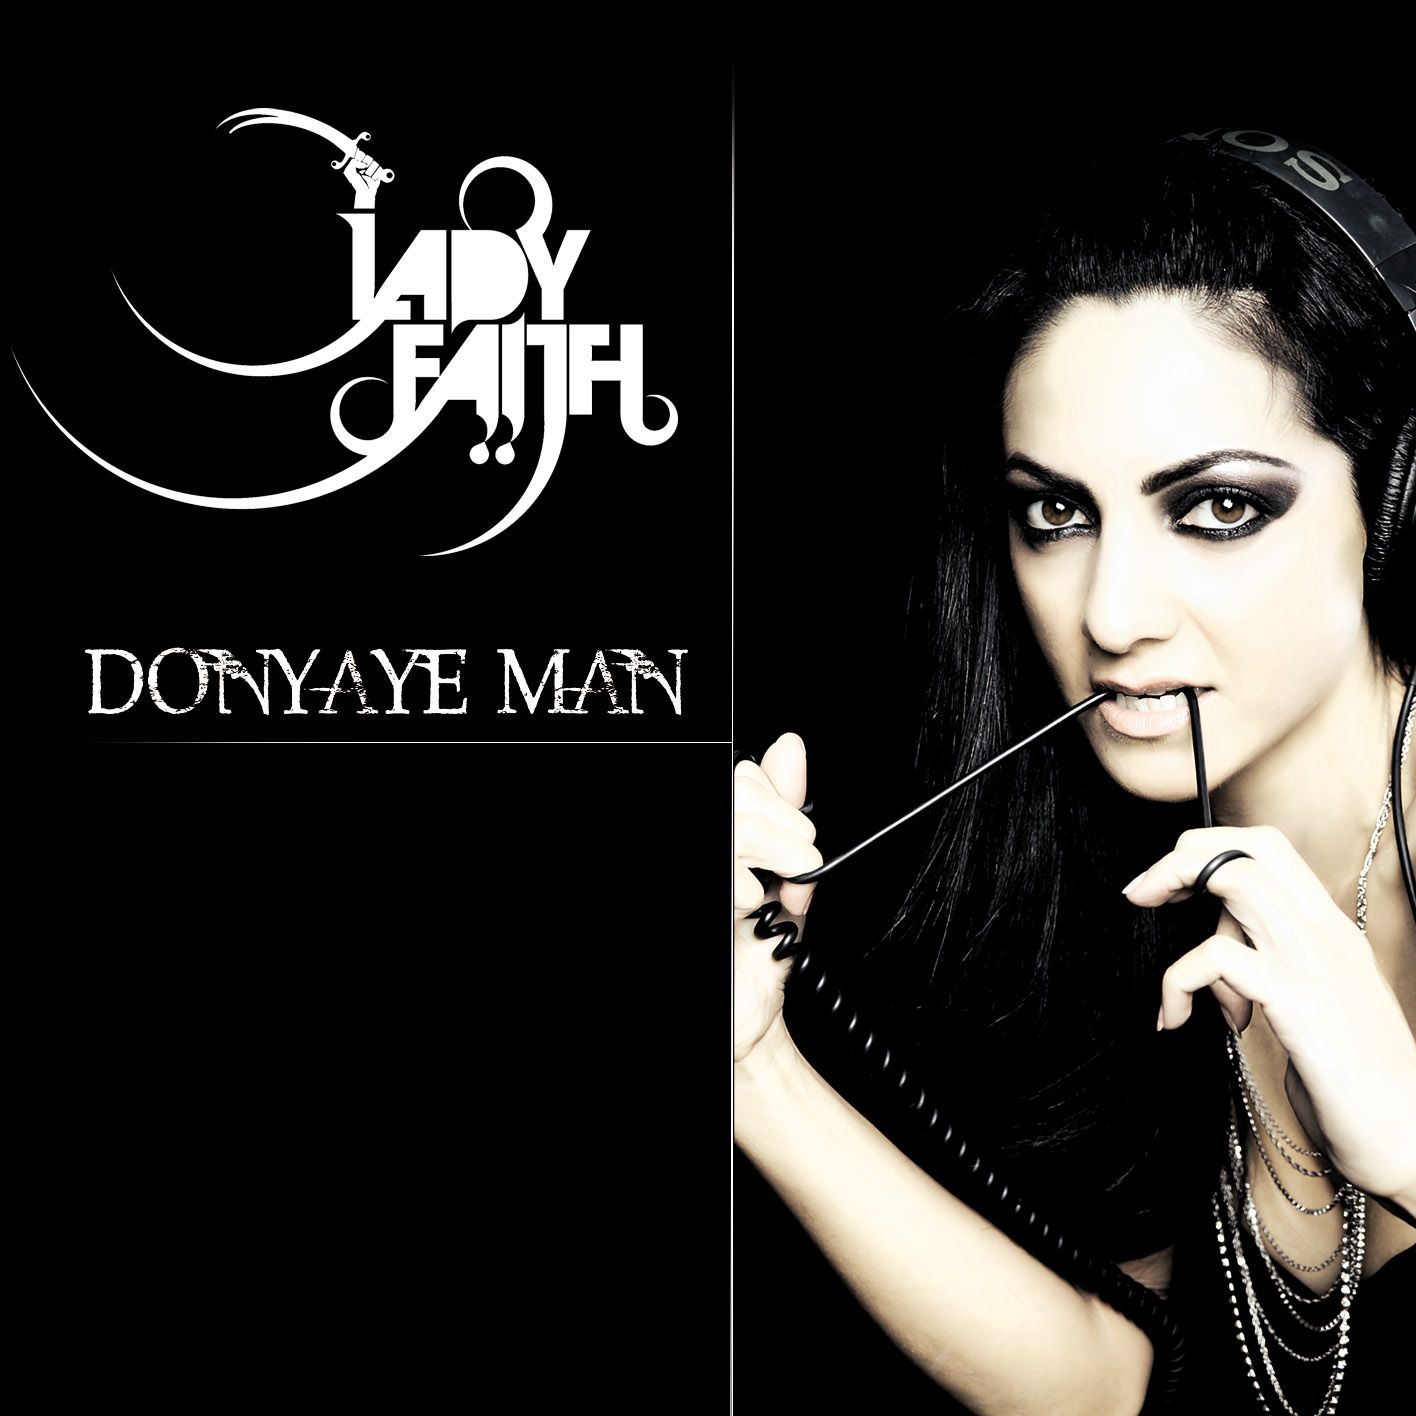 Lady Faith - Donyaye Man album art front.